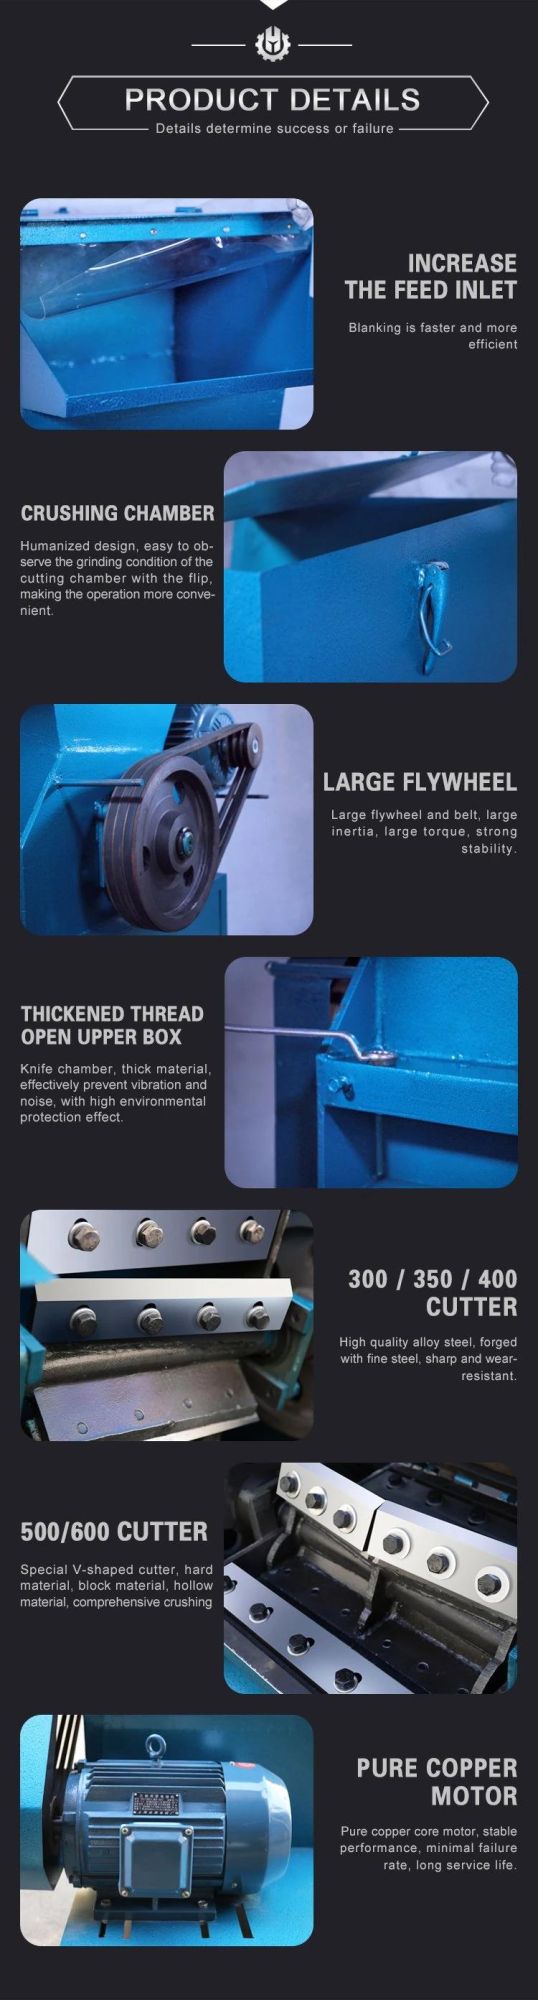 Film Granulators Grinding Machine for Crushing Soft Semi Rigid or Rigid Films Such as PP/PE/Pet/PVC Plastic Recycling